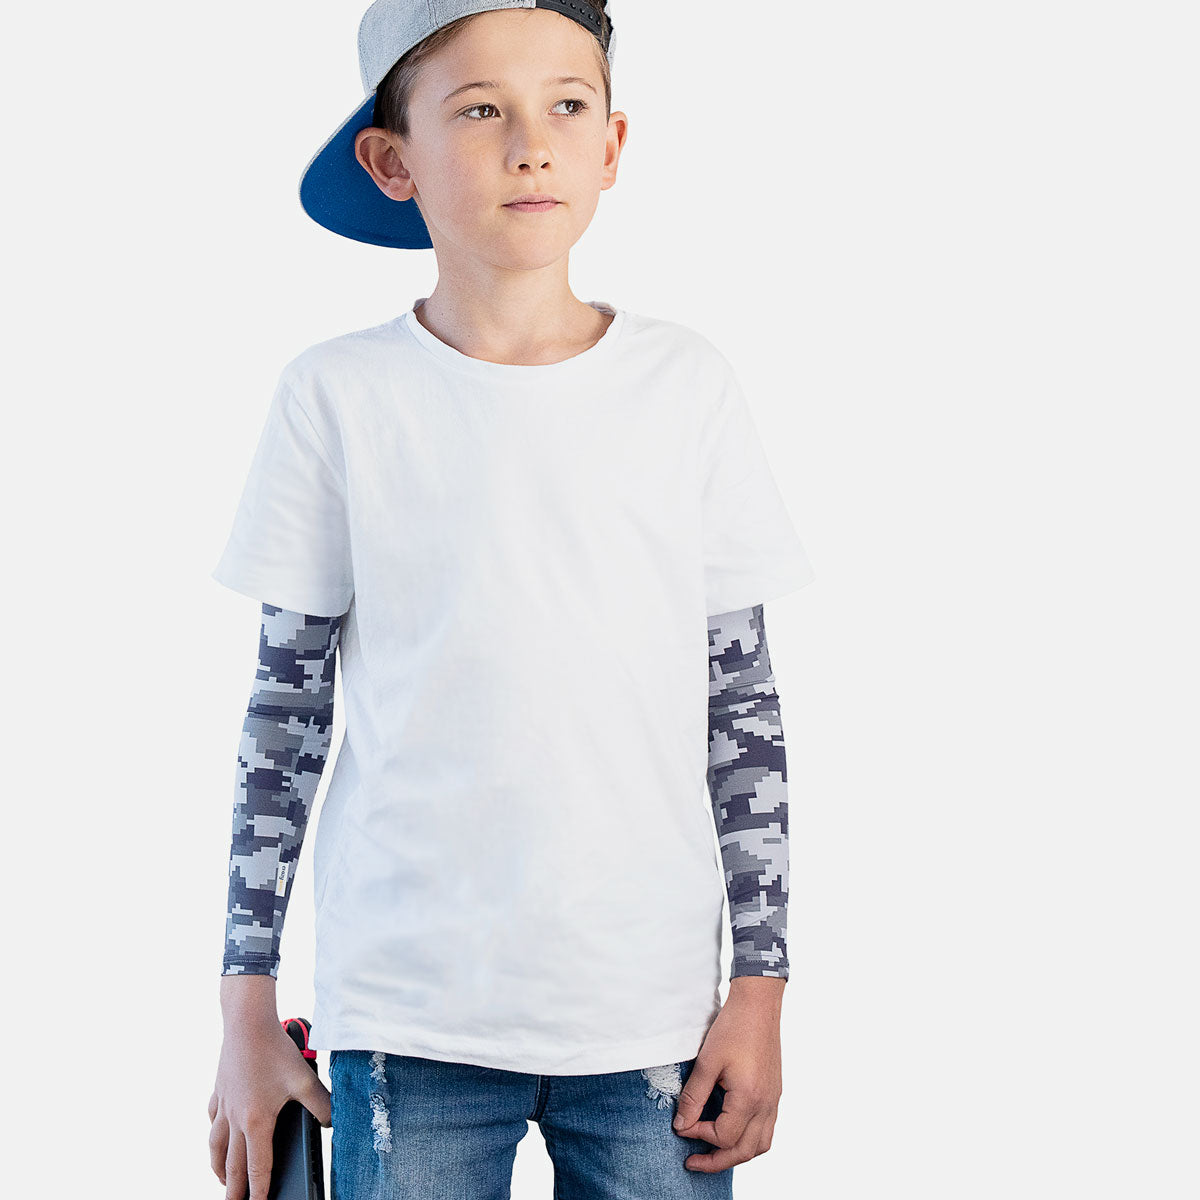 Sun protective sleeves for children - Techno design